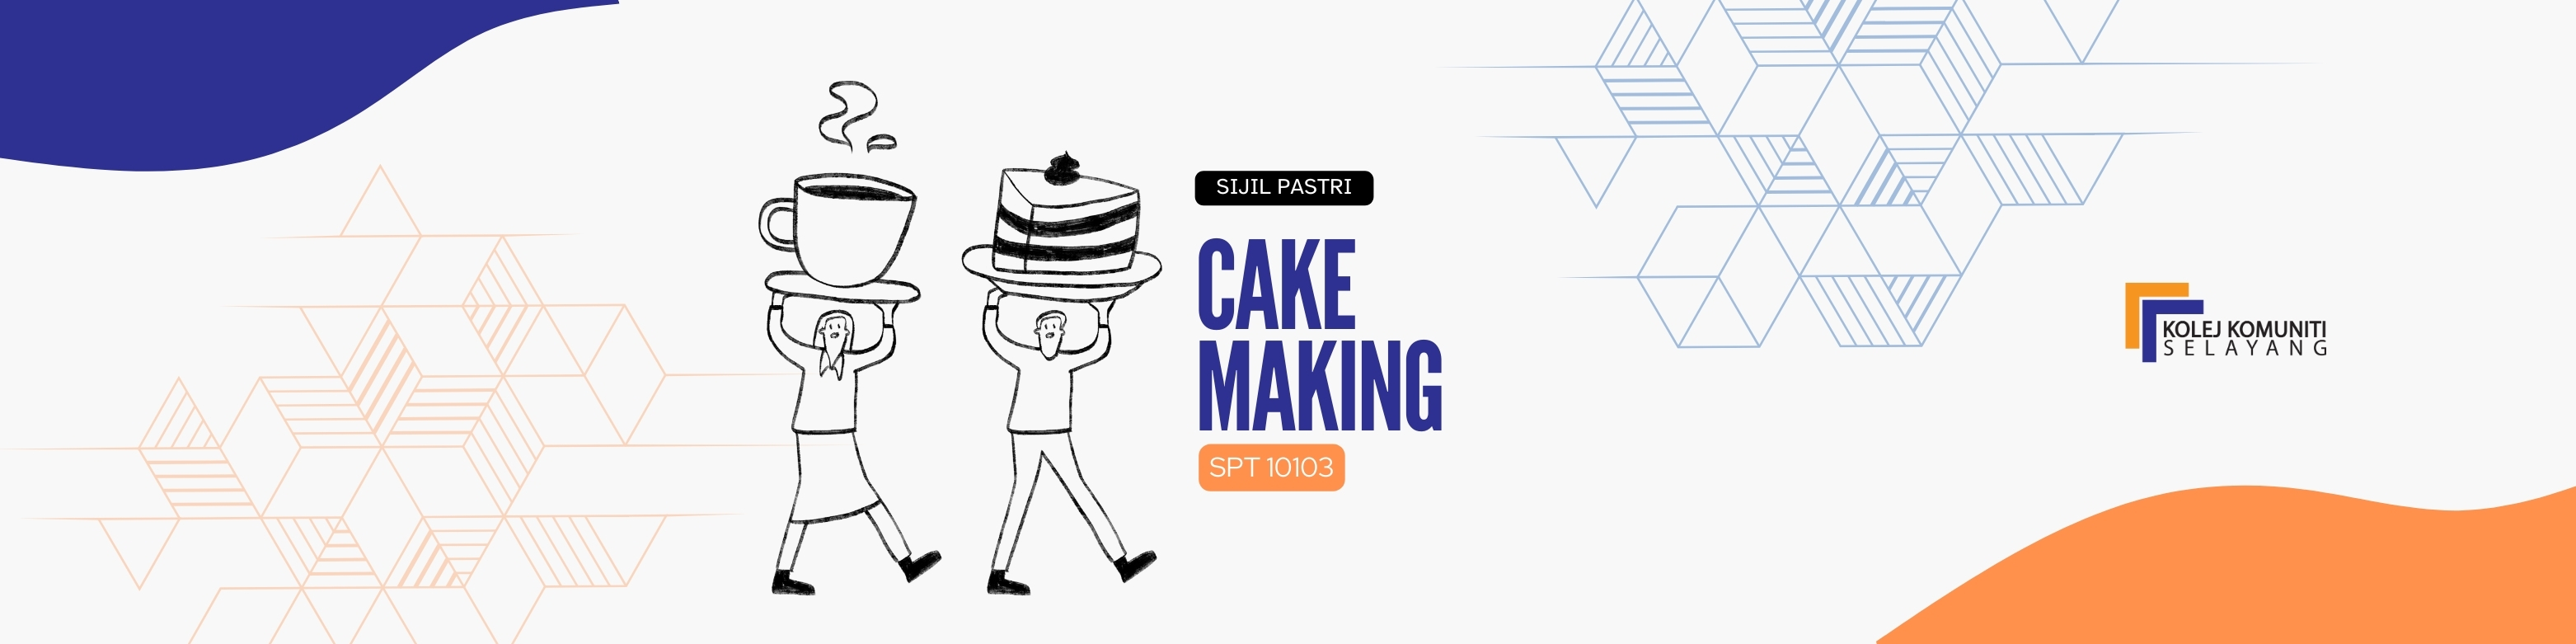 SPT10103 - CAKE MAKING